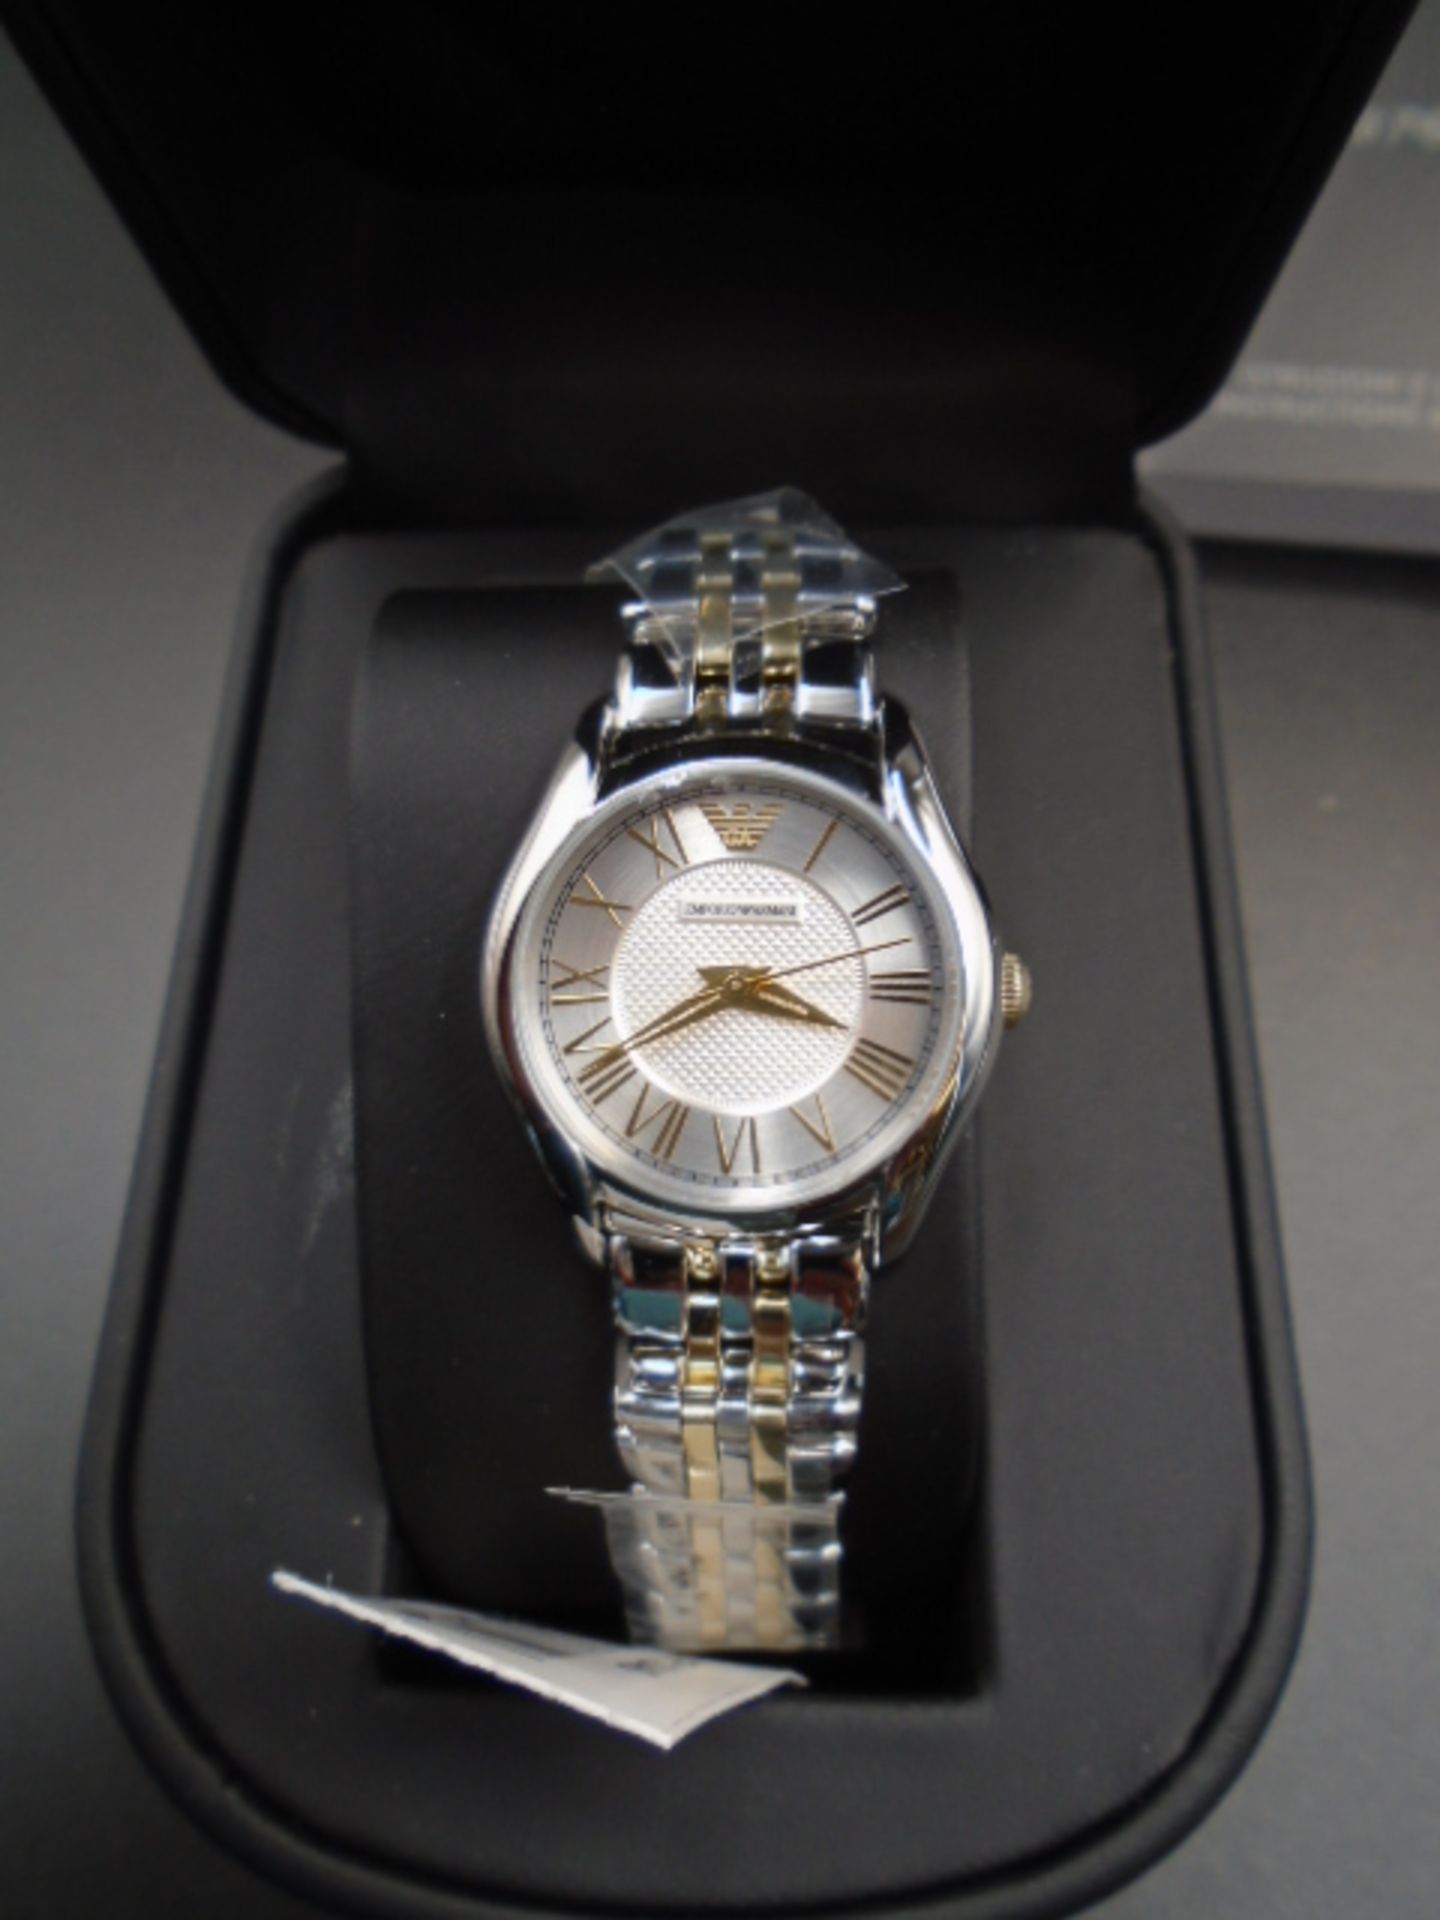 2 Emporio Armani watches - mens dino slim steel bracelet model AR 1745 and ladies quartz watch - Image 3 of 11